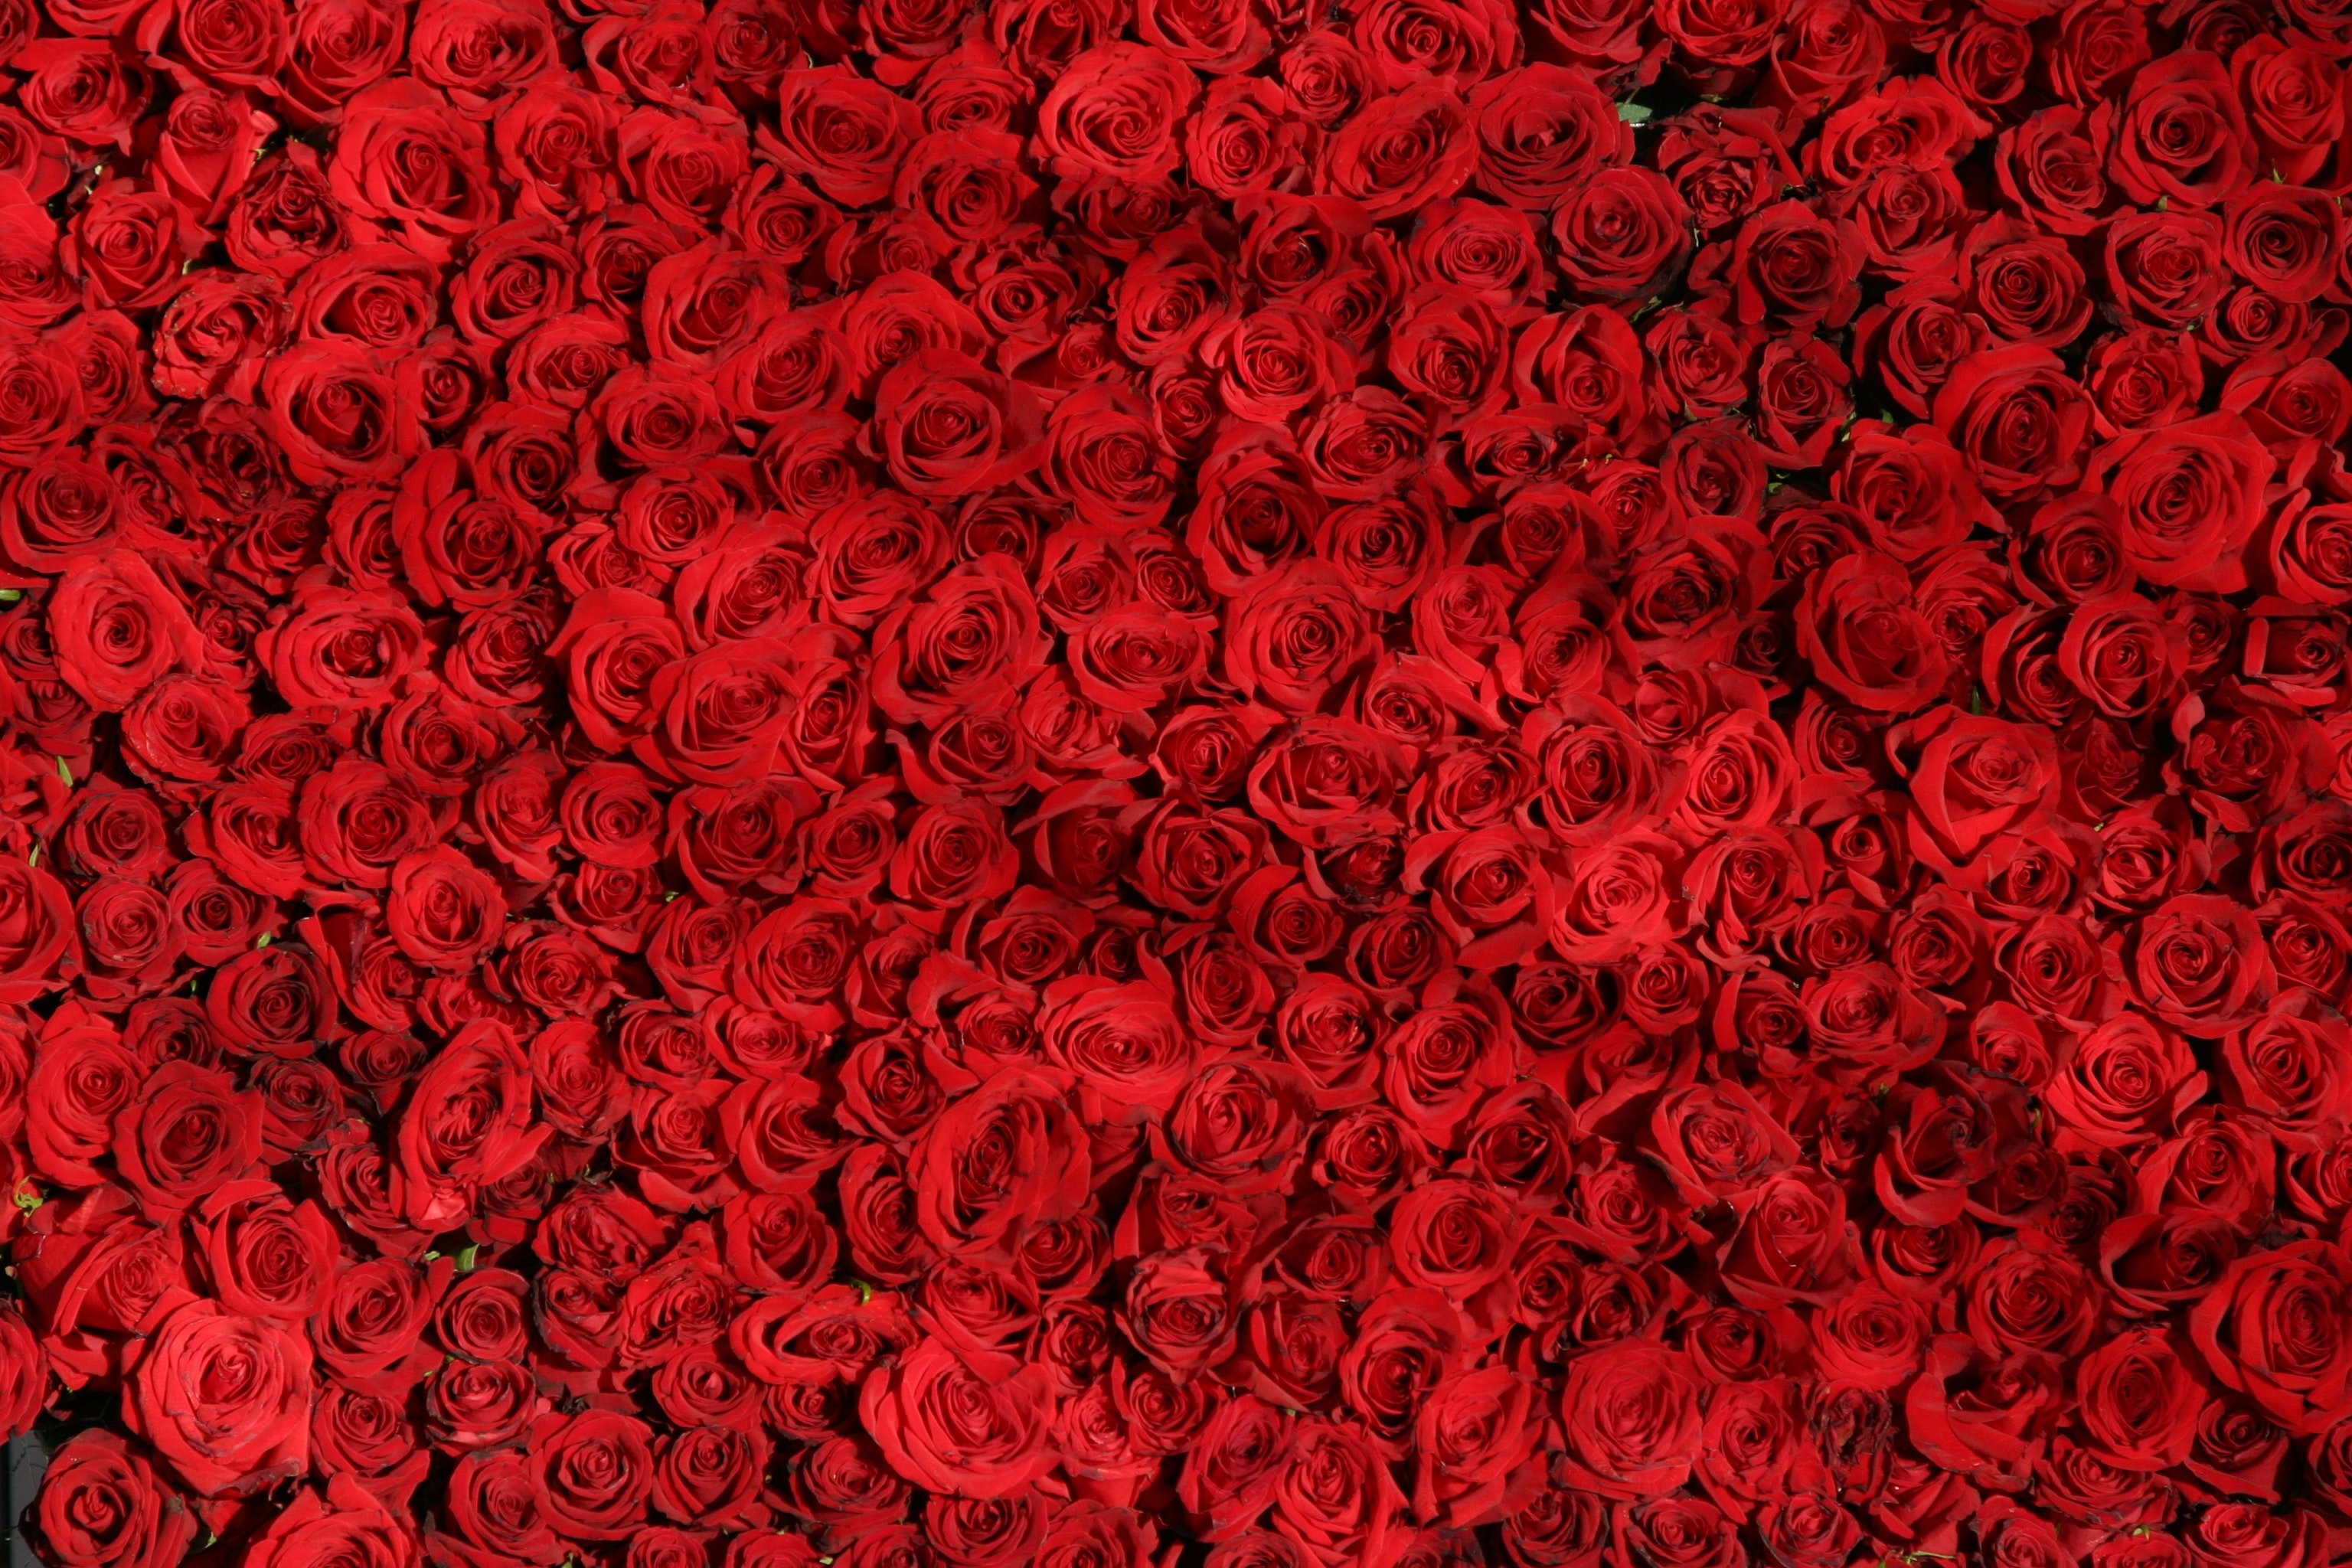 1000+ Interesting Red Flowers Photos · Pexels · Free Stock Photos